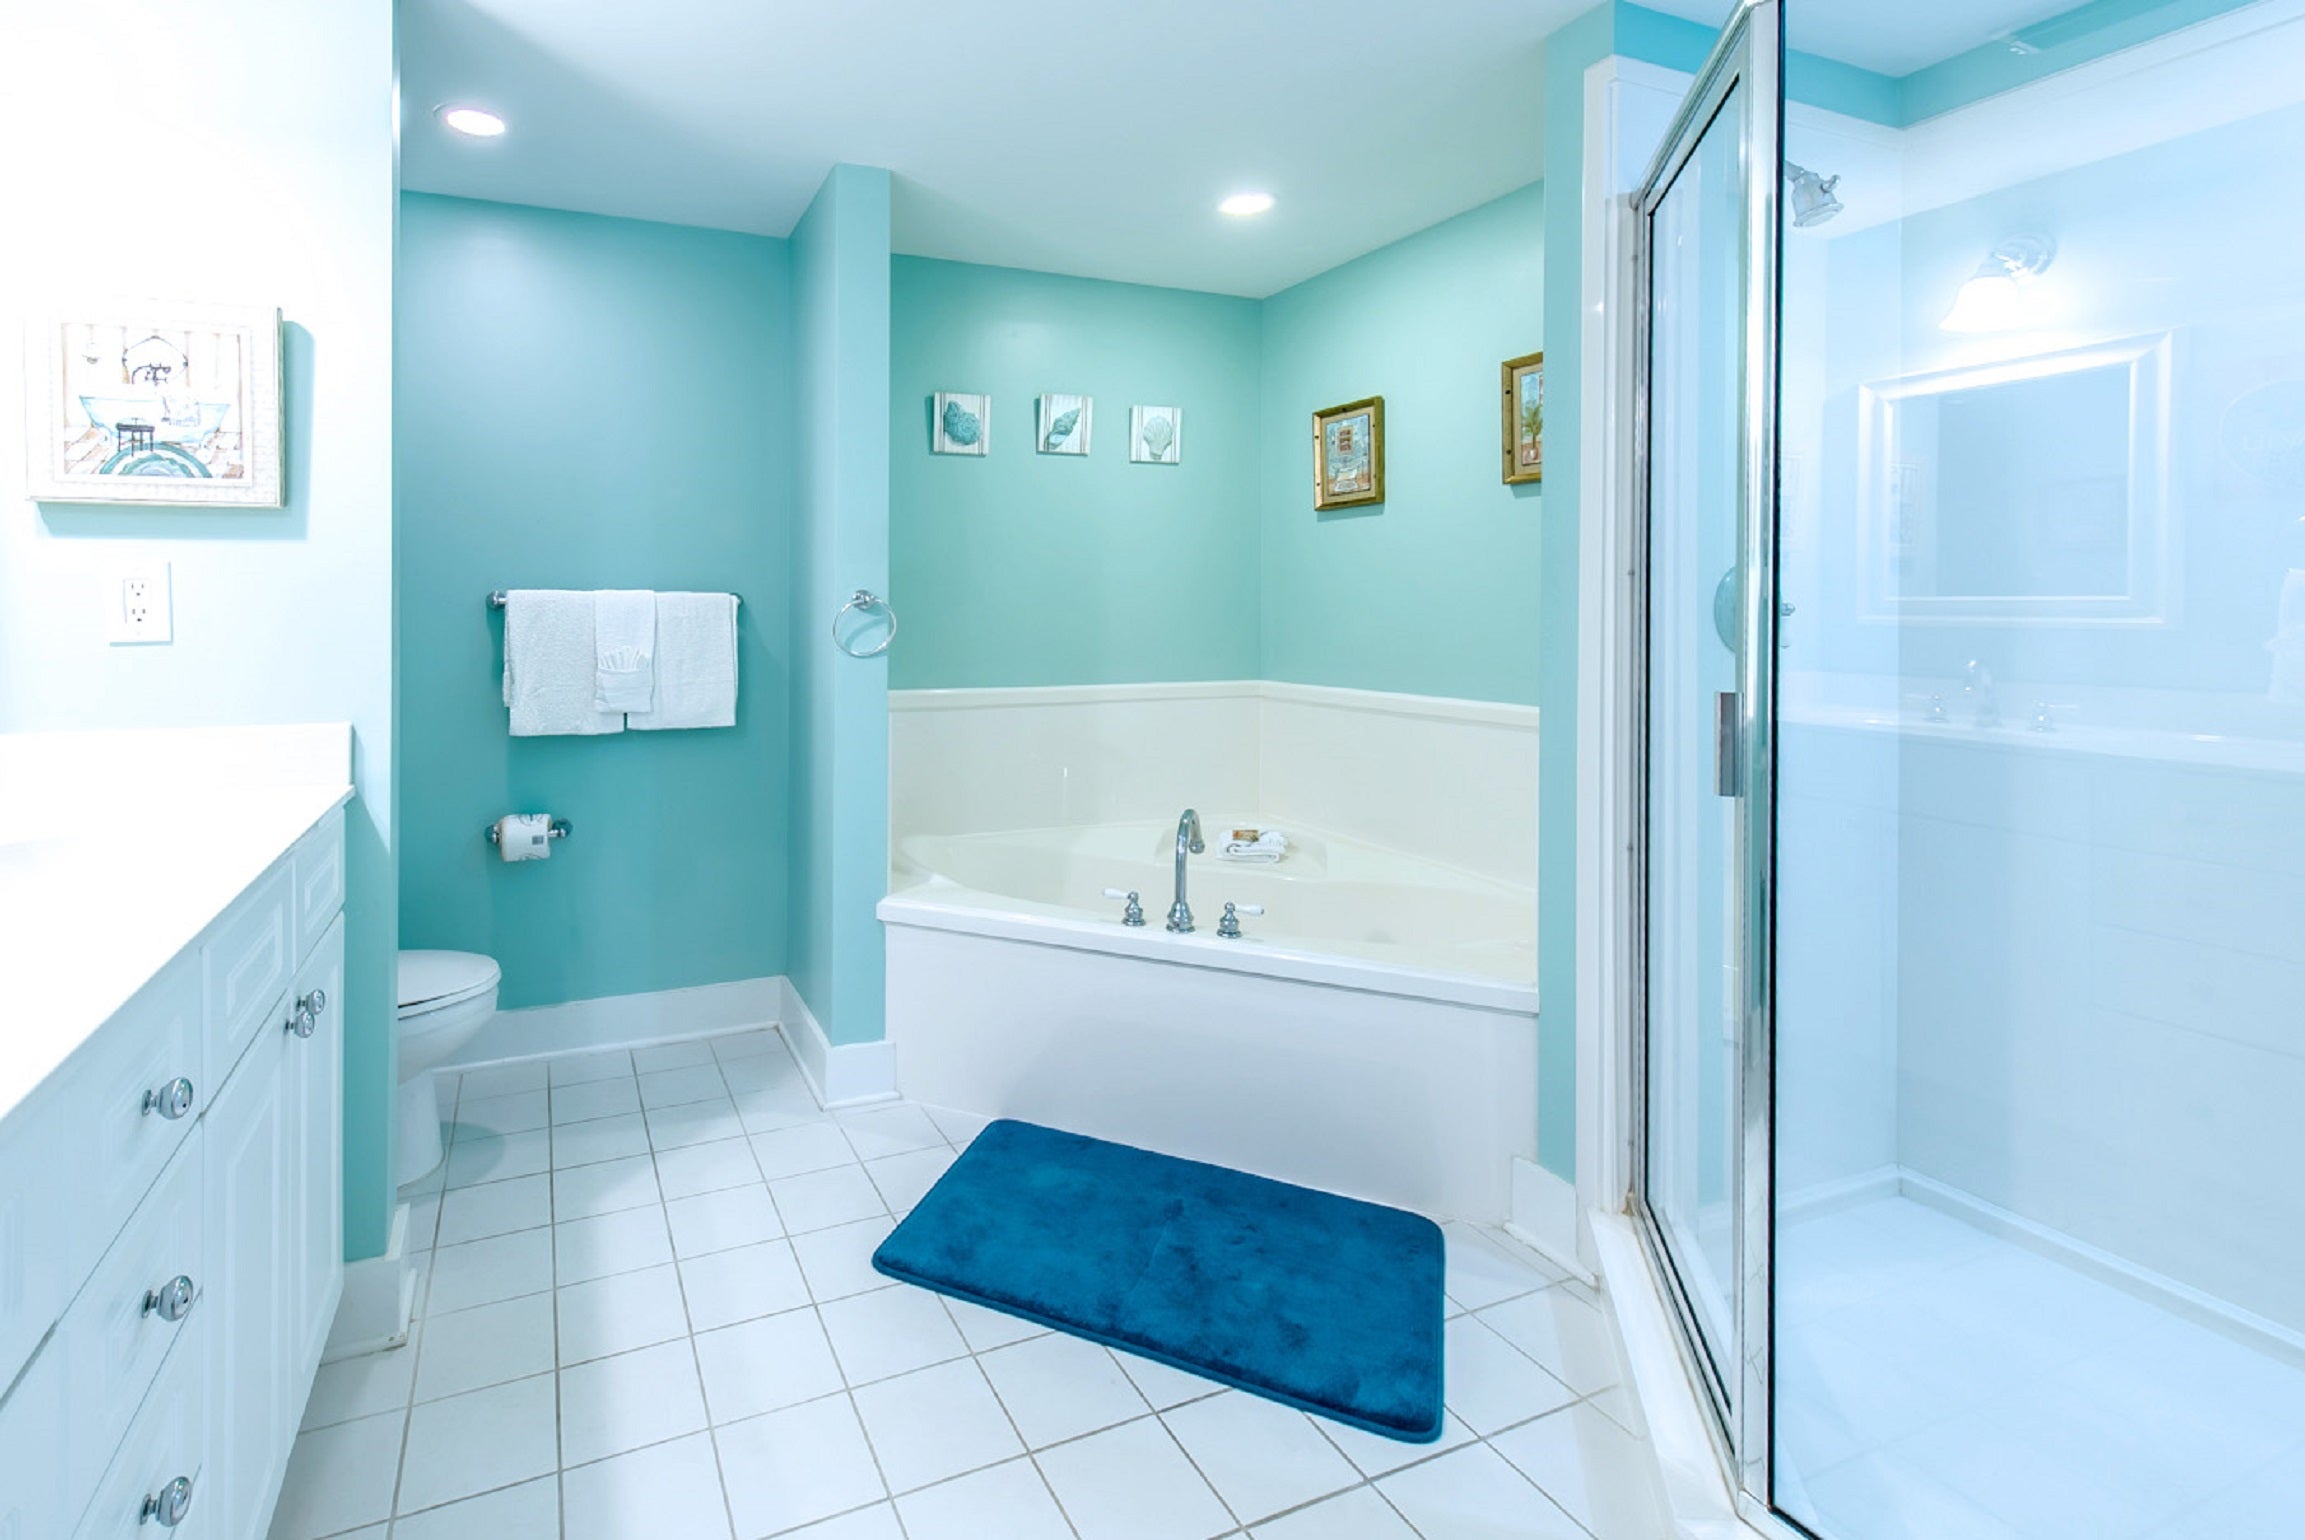 Master Bath - Soaking Tub and Glassed Shower